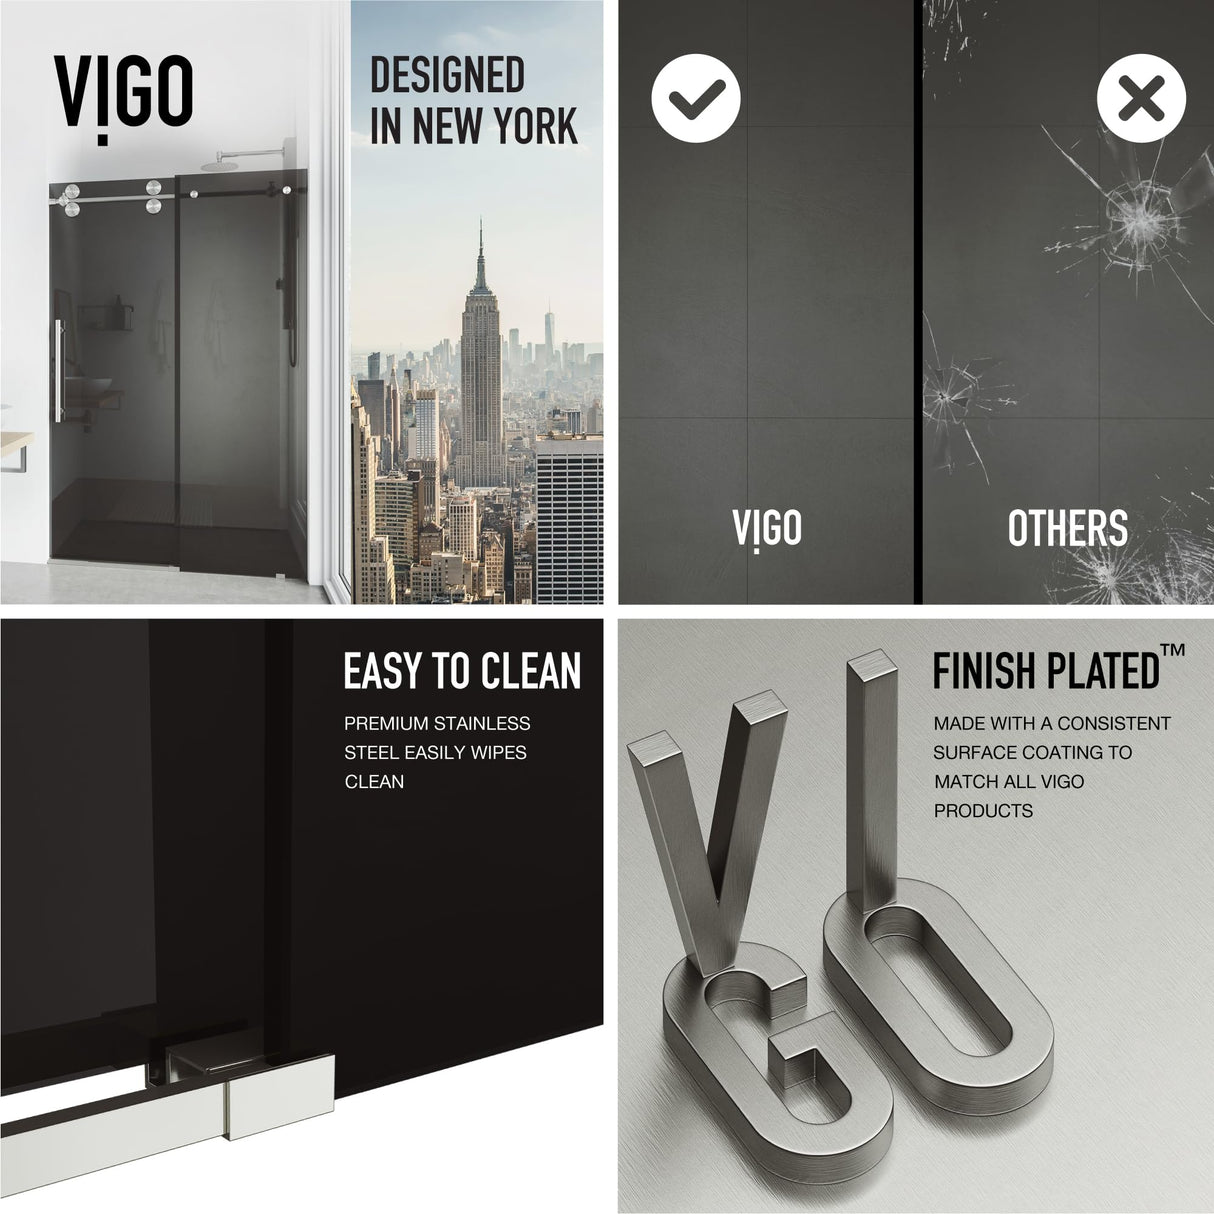 VIGO Adjustable 56-60" W x 74" H Elan Frameless Sliding Shower Door with Black Tint Tempered Glass, Reversible Handle in Stainless Steel